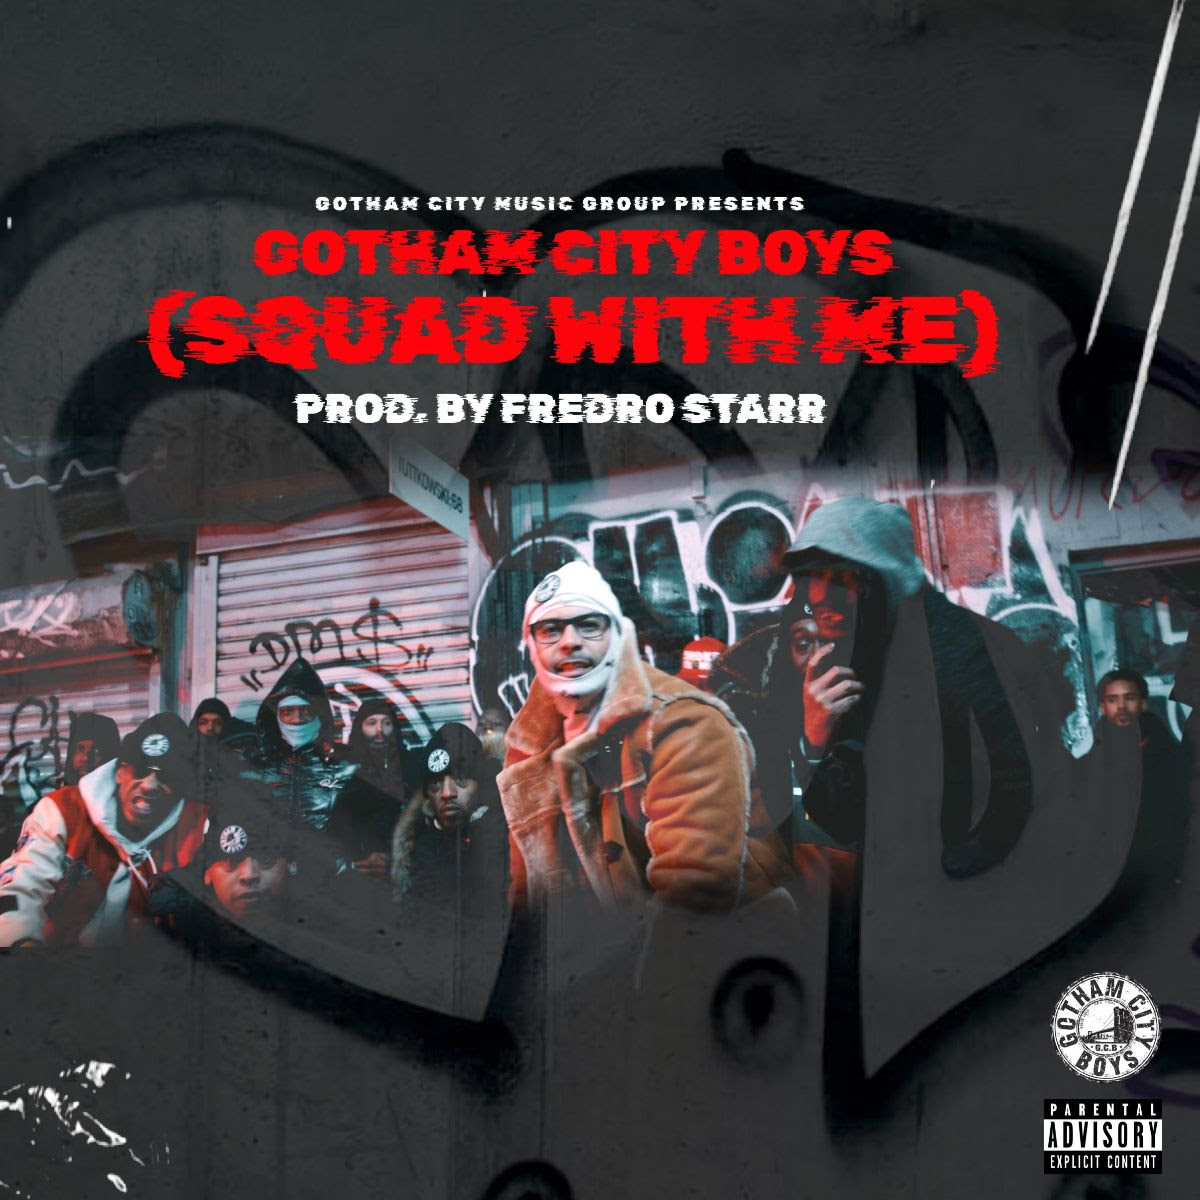 Gotham City Boys “Squad With Me” (prod. by Fredro Starr)